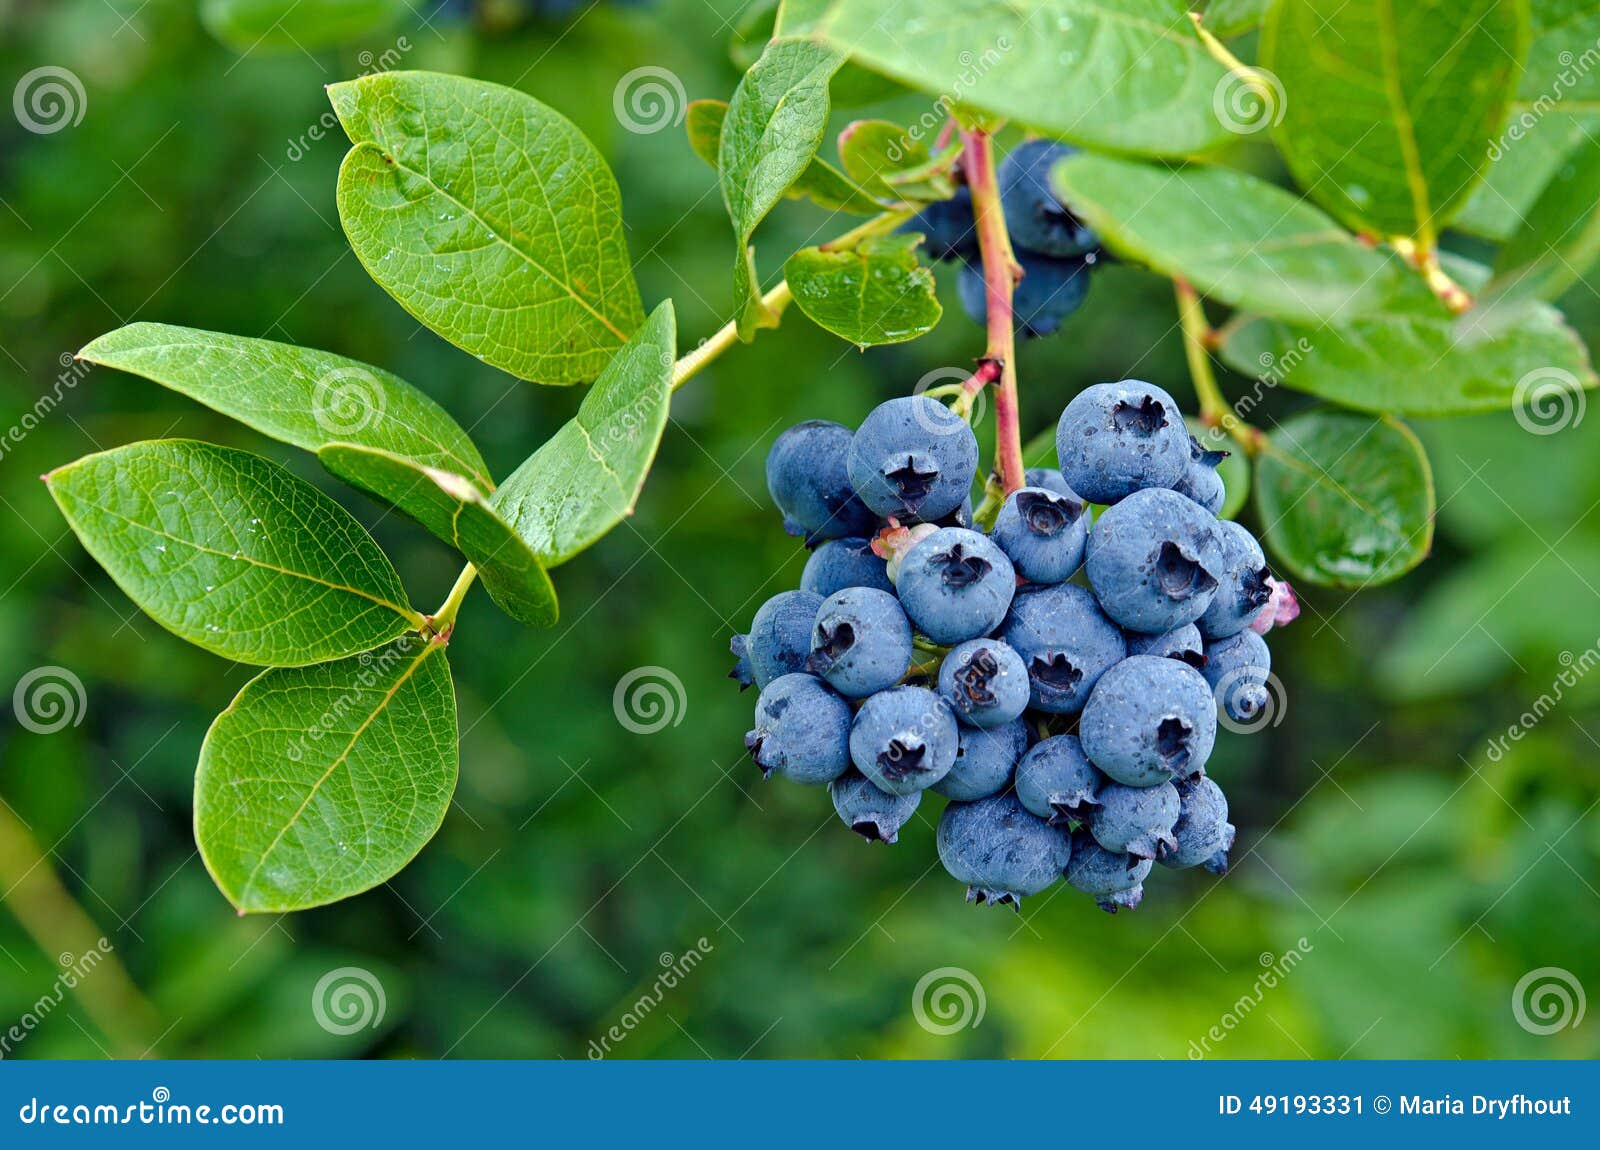 blueberry cluster on bush